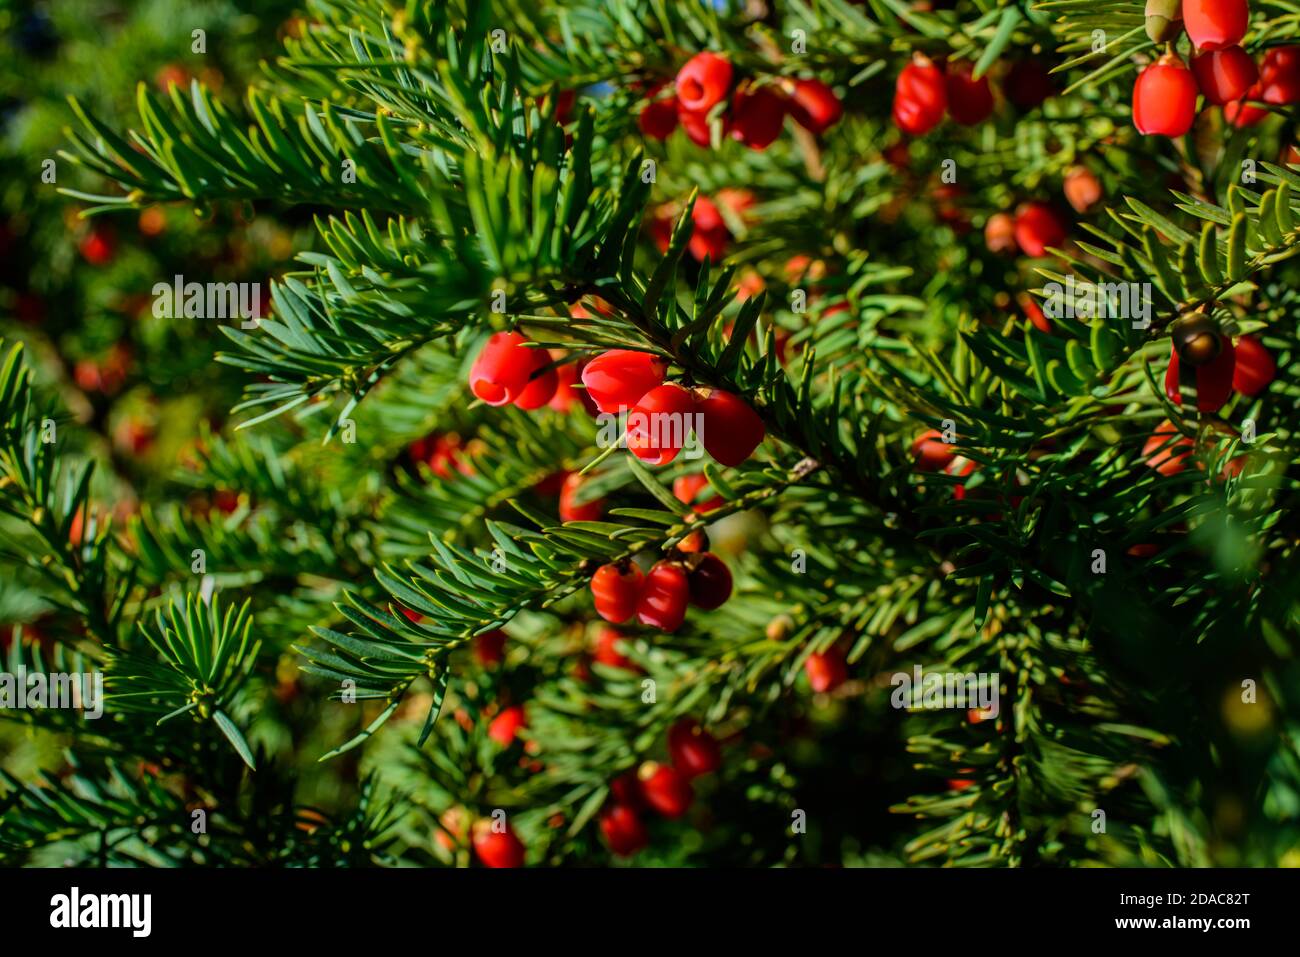 Red berries growing on evergreen yew tree in sunlight, European yew tree Stock Photo